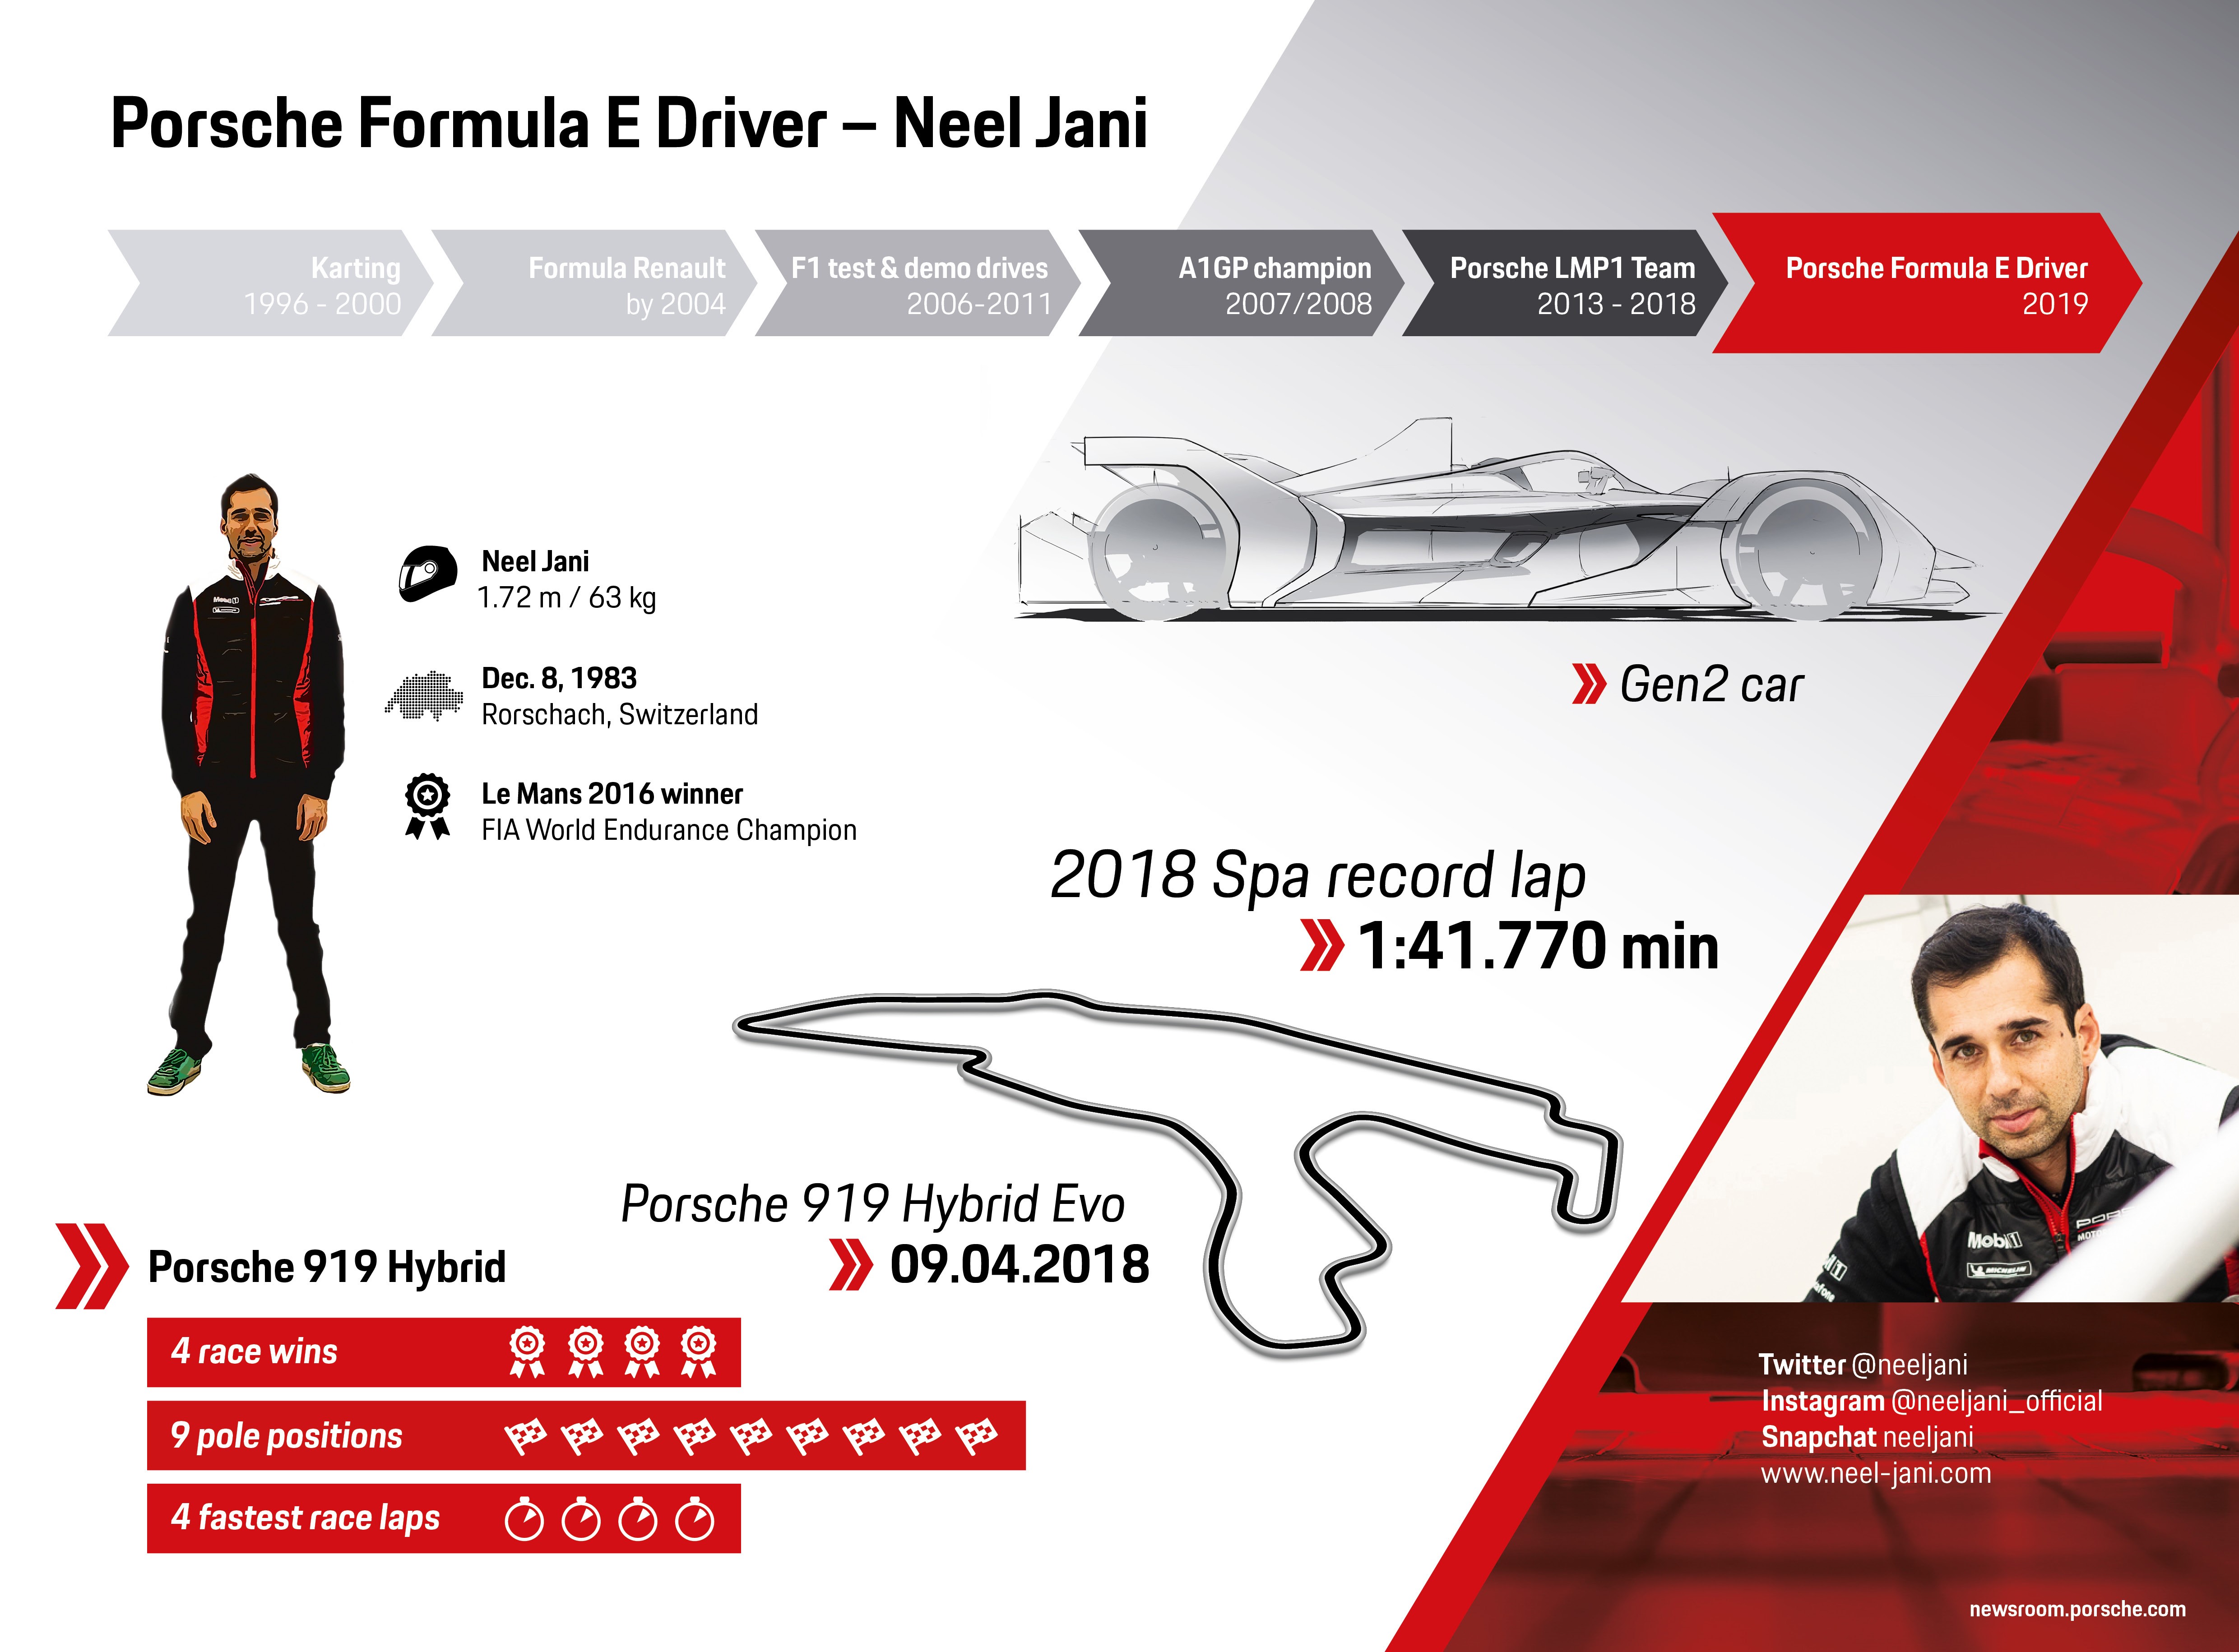 Piloto Porsche de Fórmula E: Neel Jani, infographic, 2018, Porsche AG